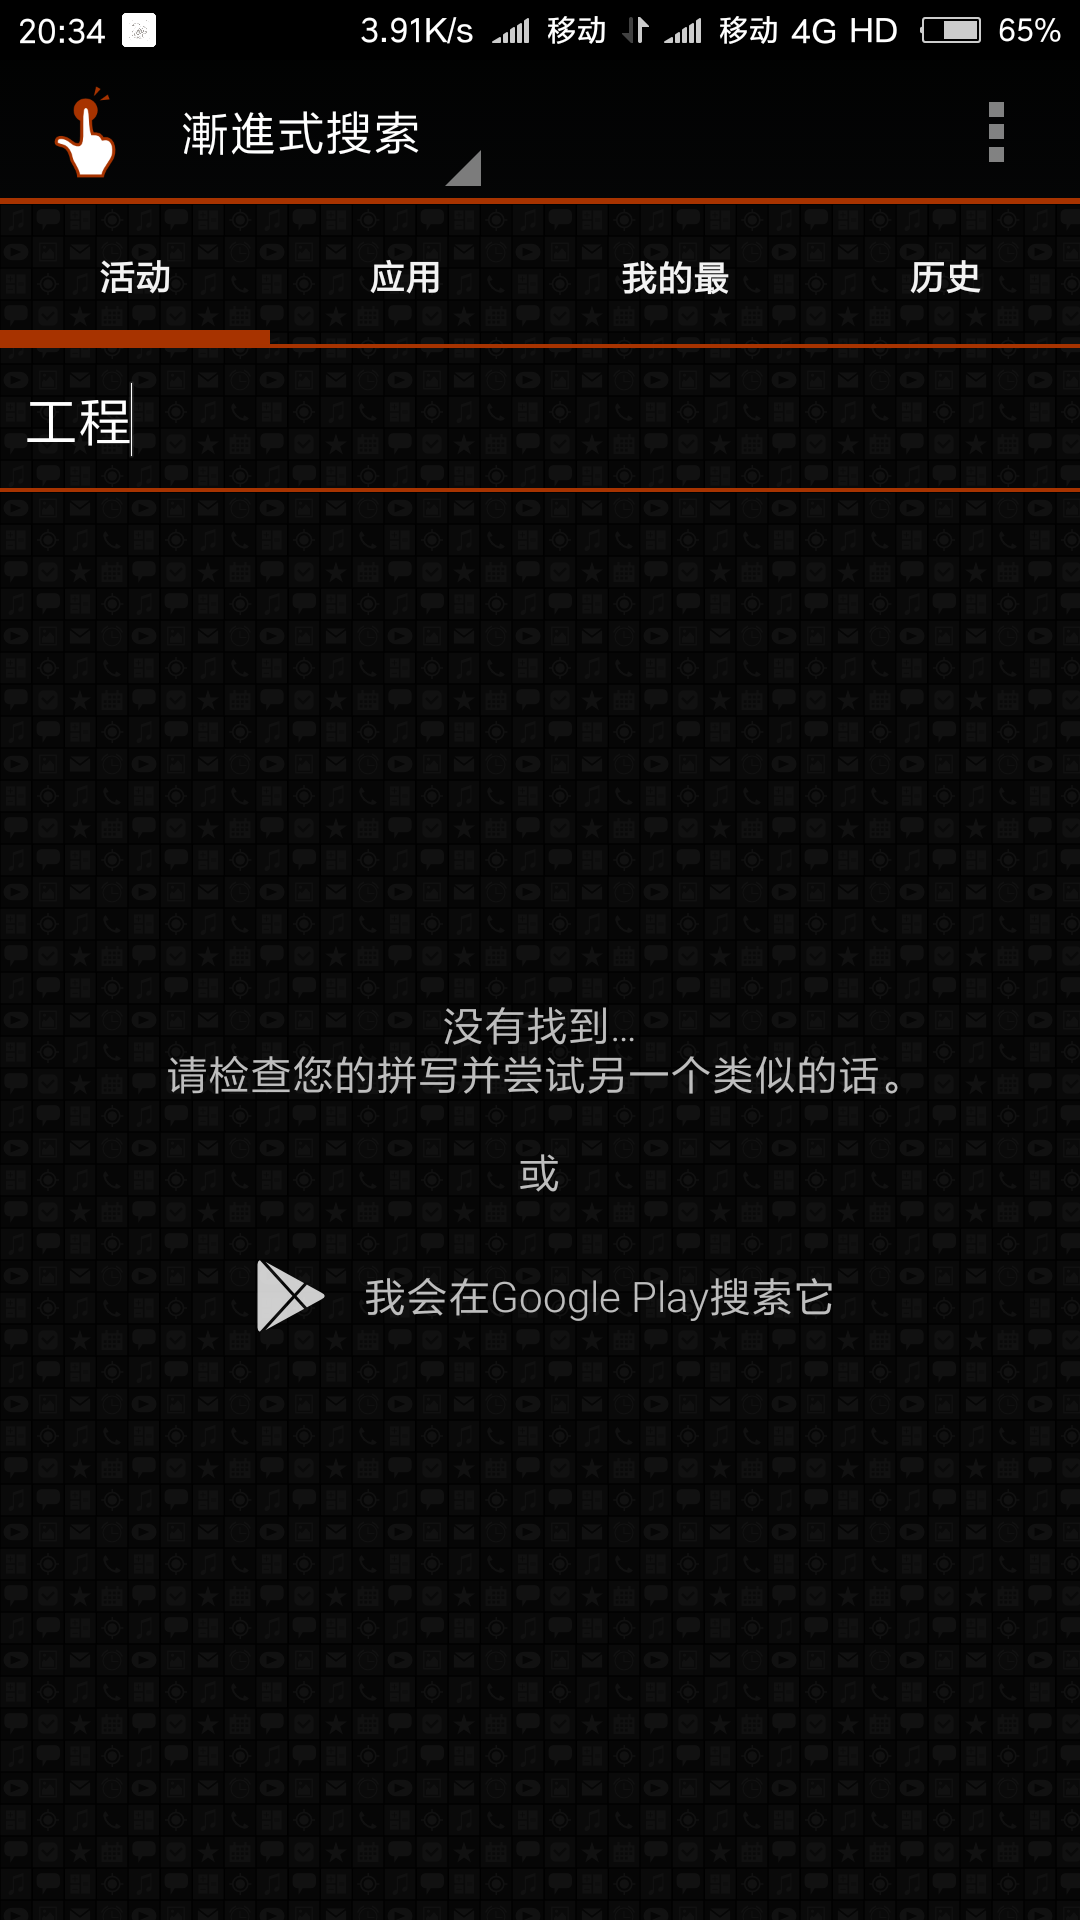 Screenshot_2018-05-11-20-34-33-350_com.sika524.android.quickshortcut.png